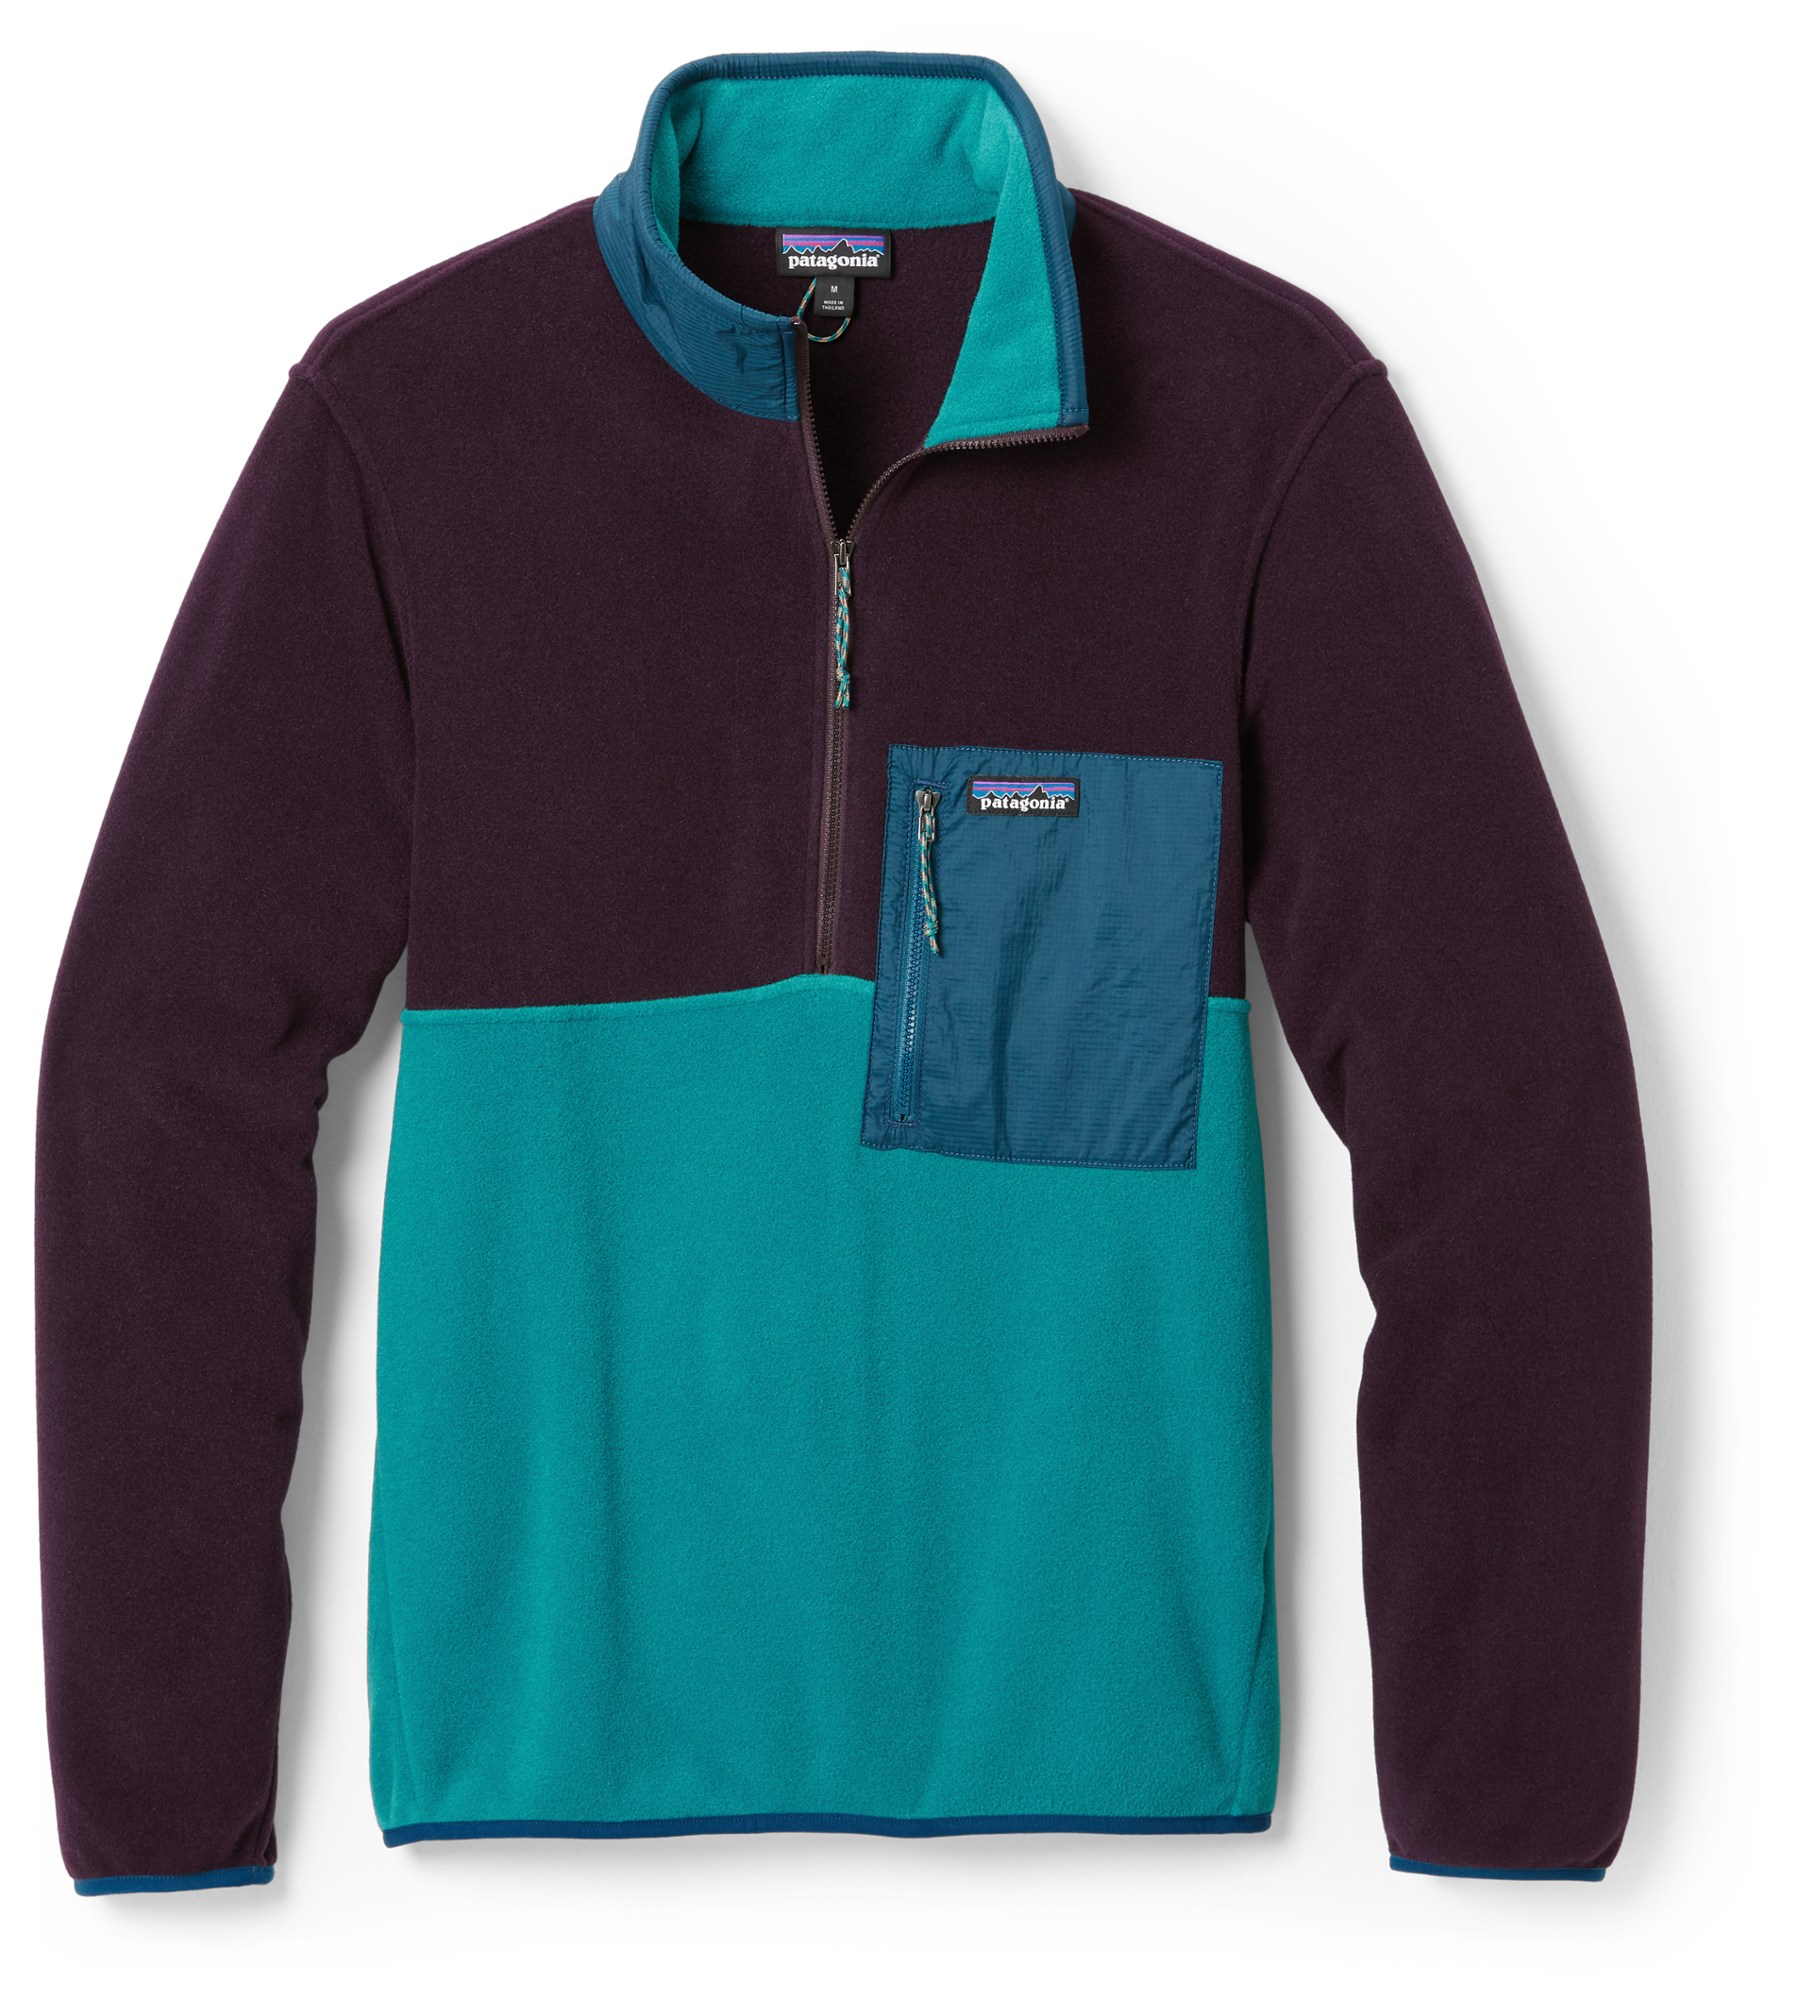 Пуловер Microdini с молнией до половины - мужской Patagonia, синий